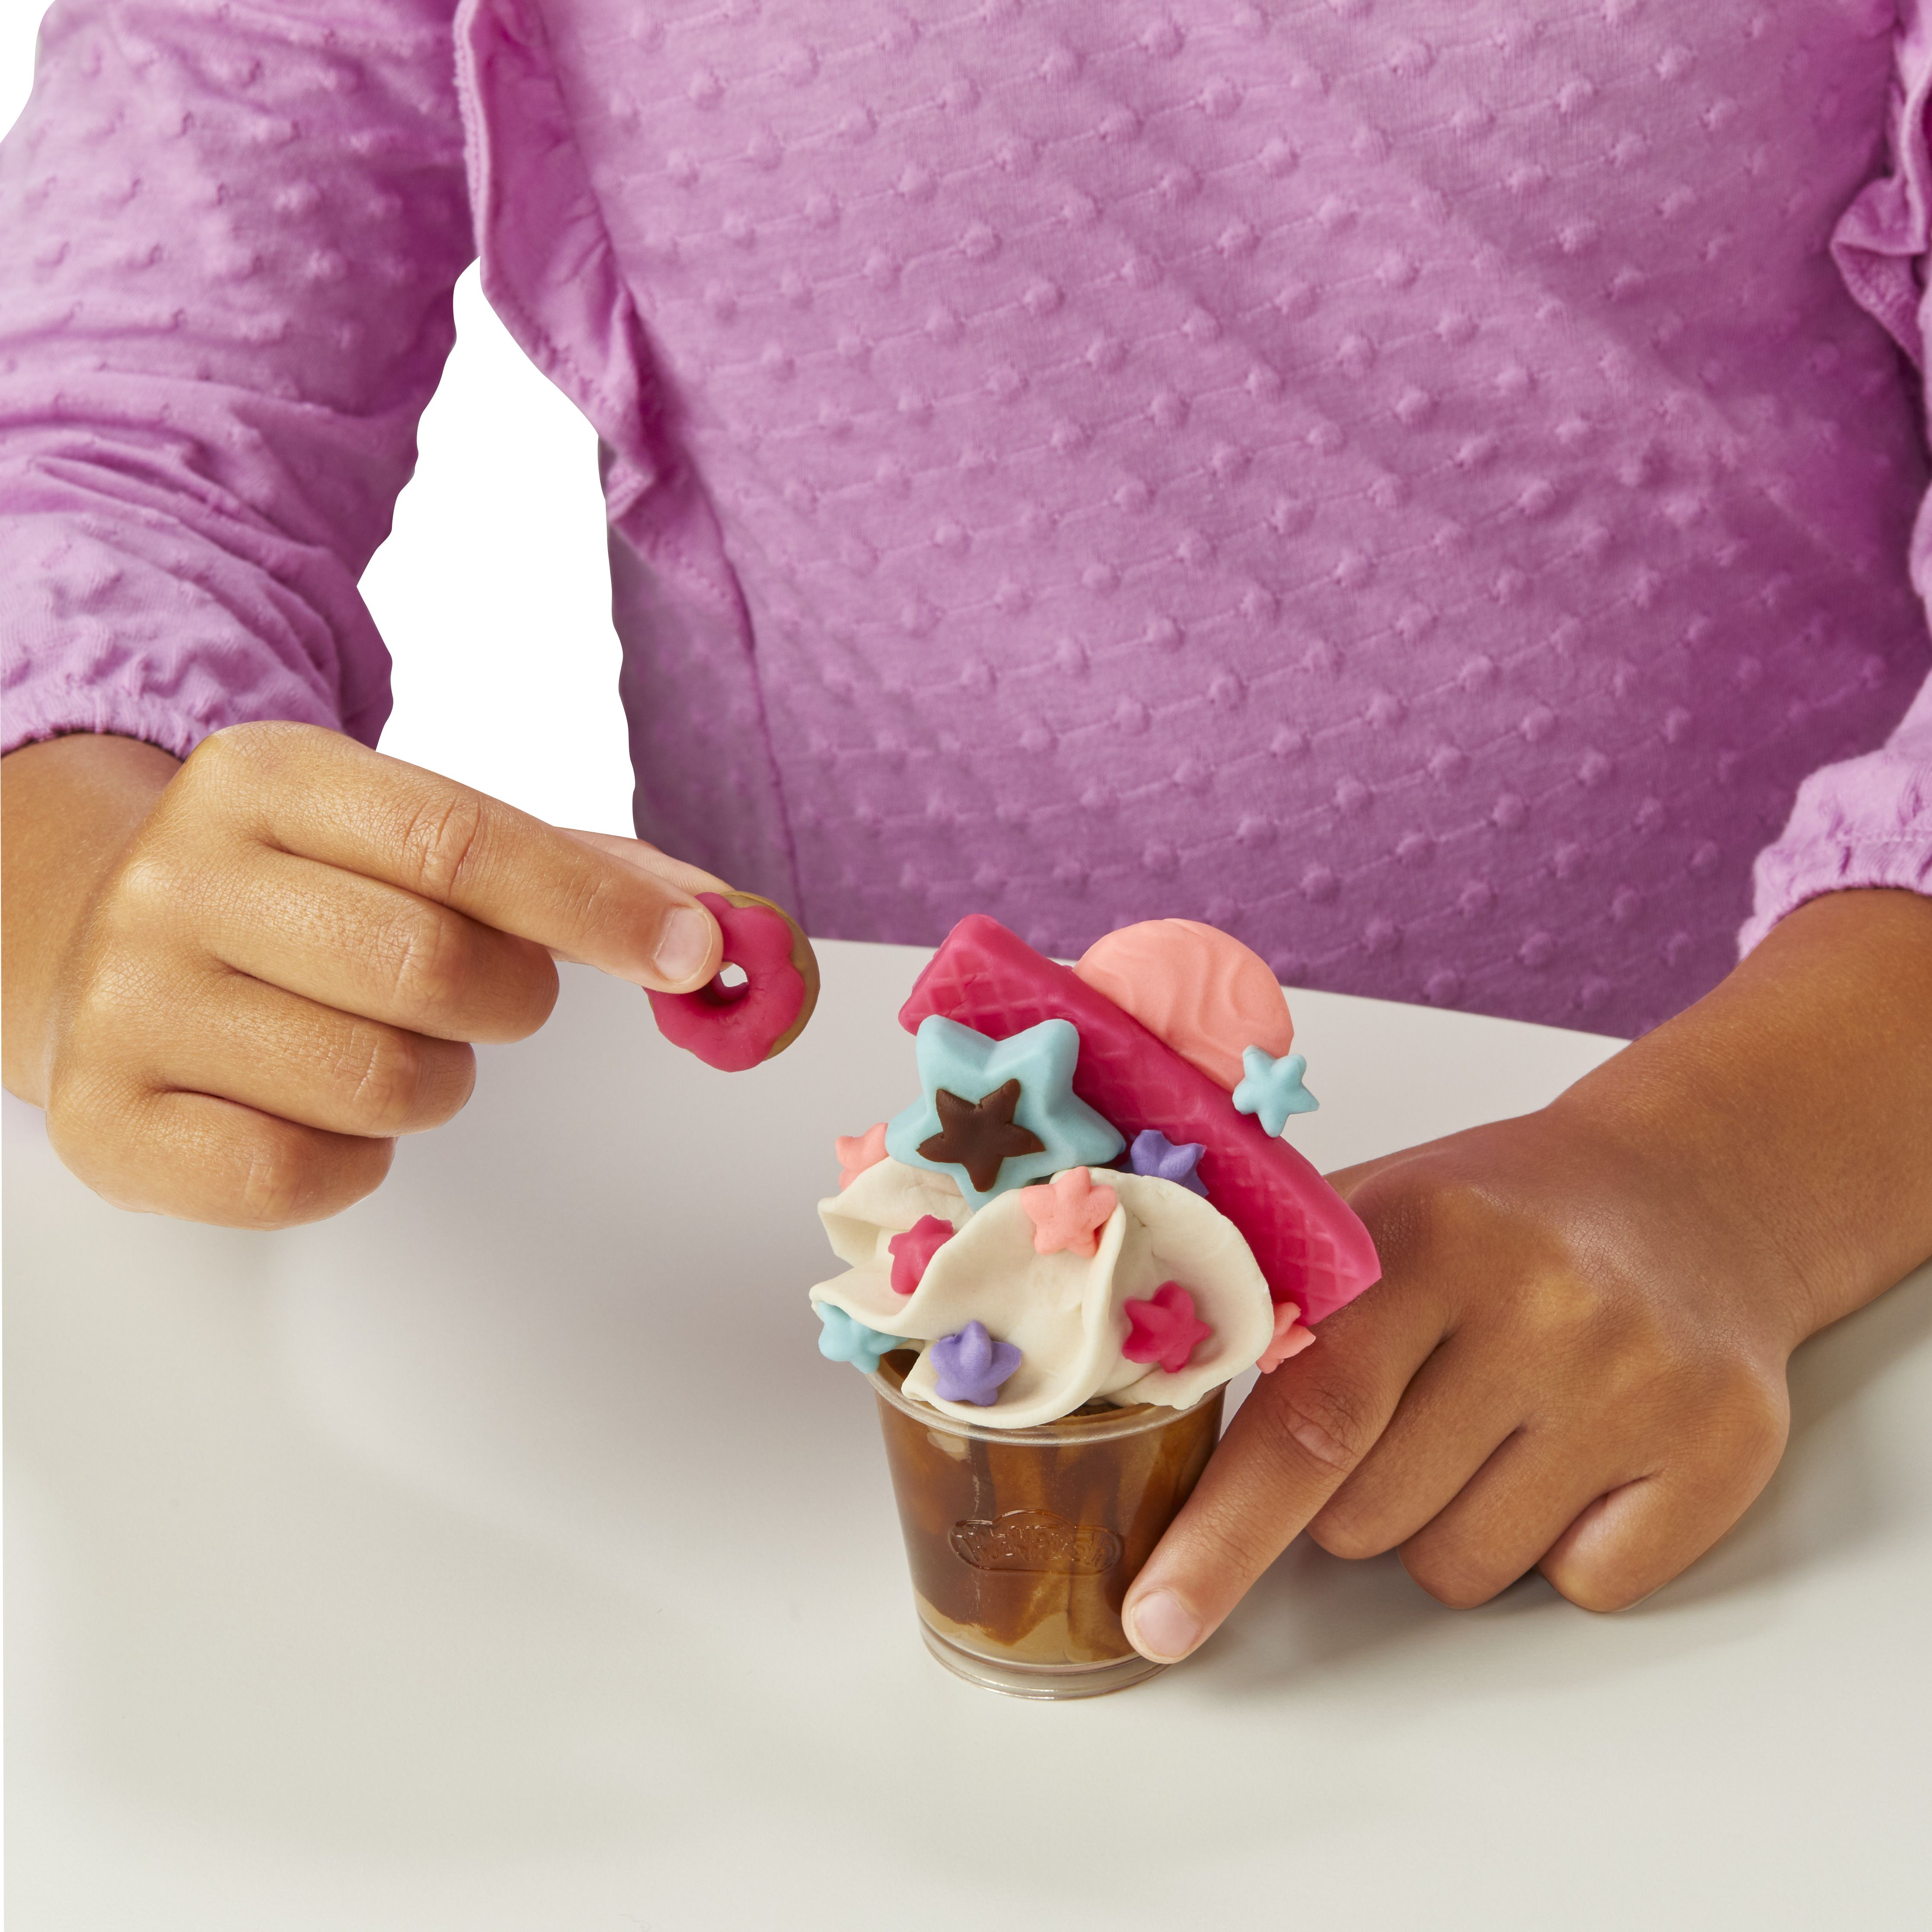 HASBRO GAMING Mehrfarbig Play-Doh Knetspaß Spielset, Café